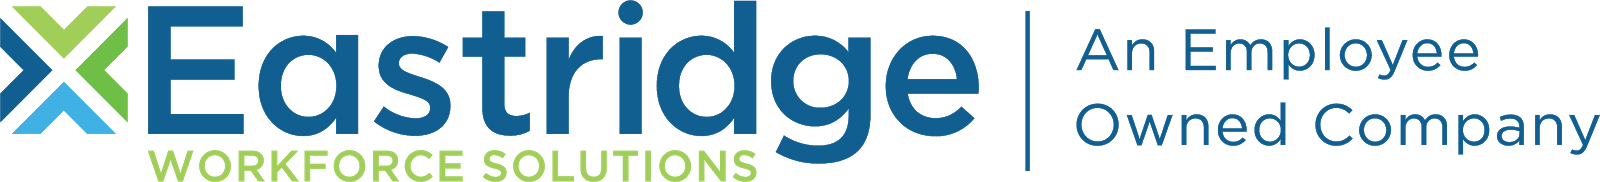 Eastridge Workforce Solutions logo